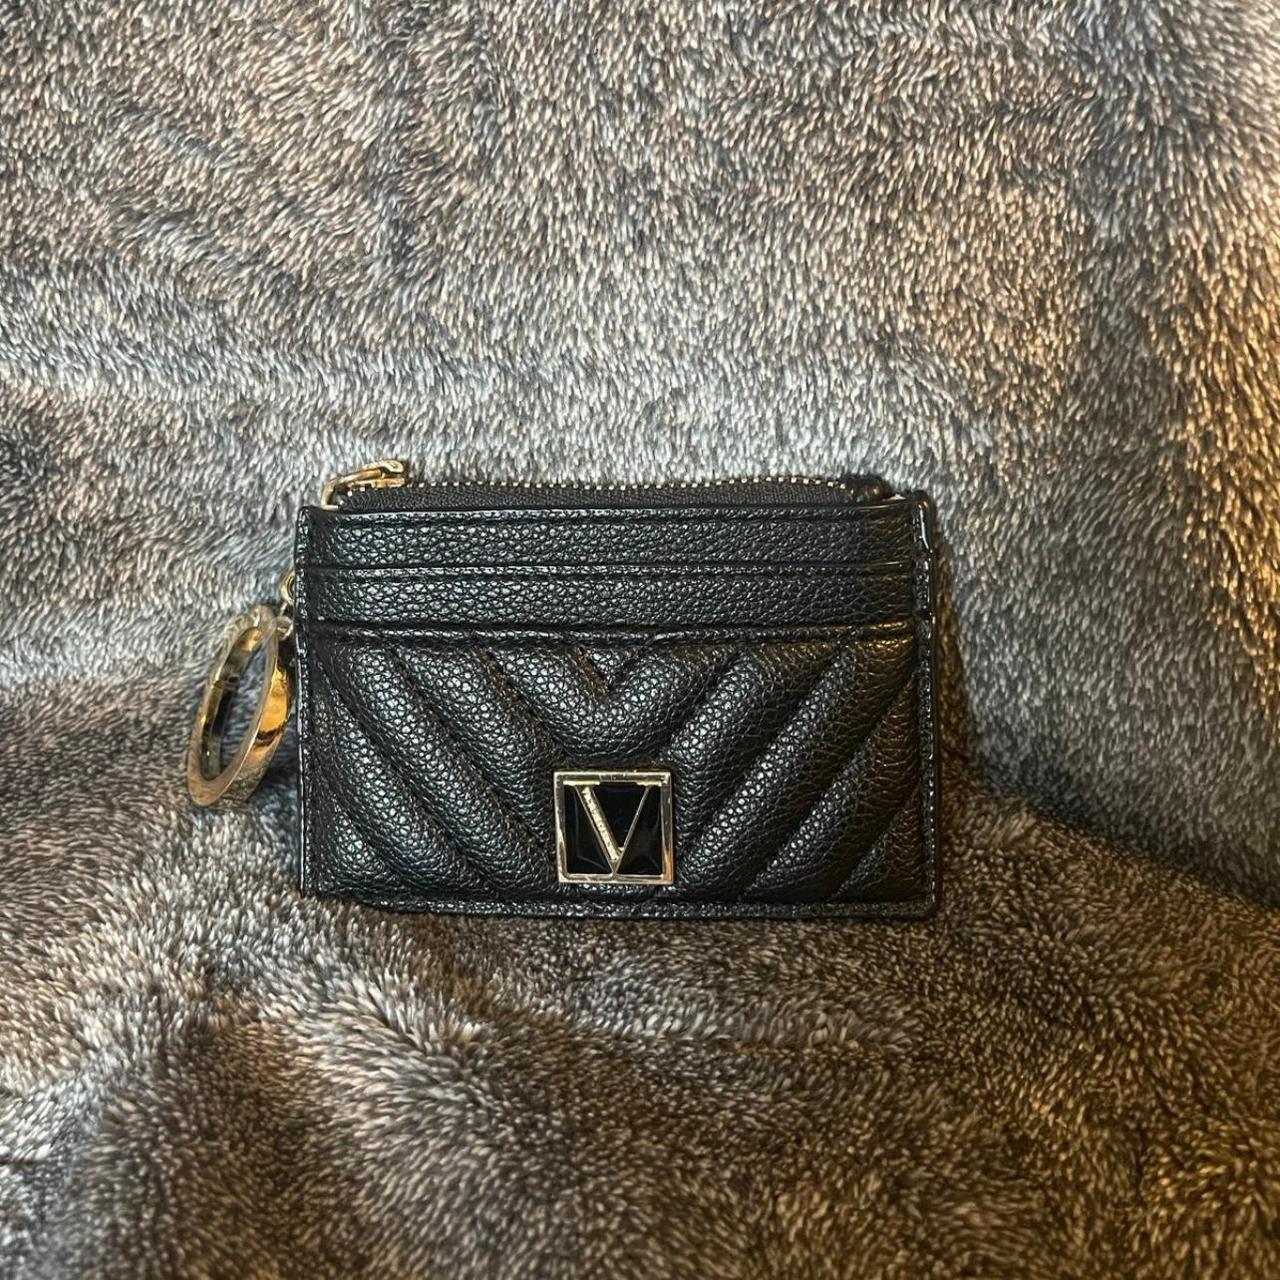 wallet victoria secret purse